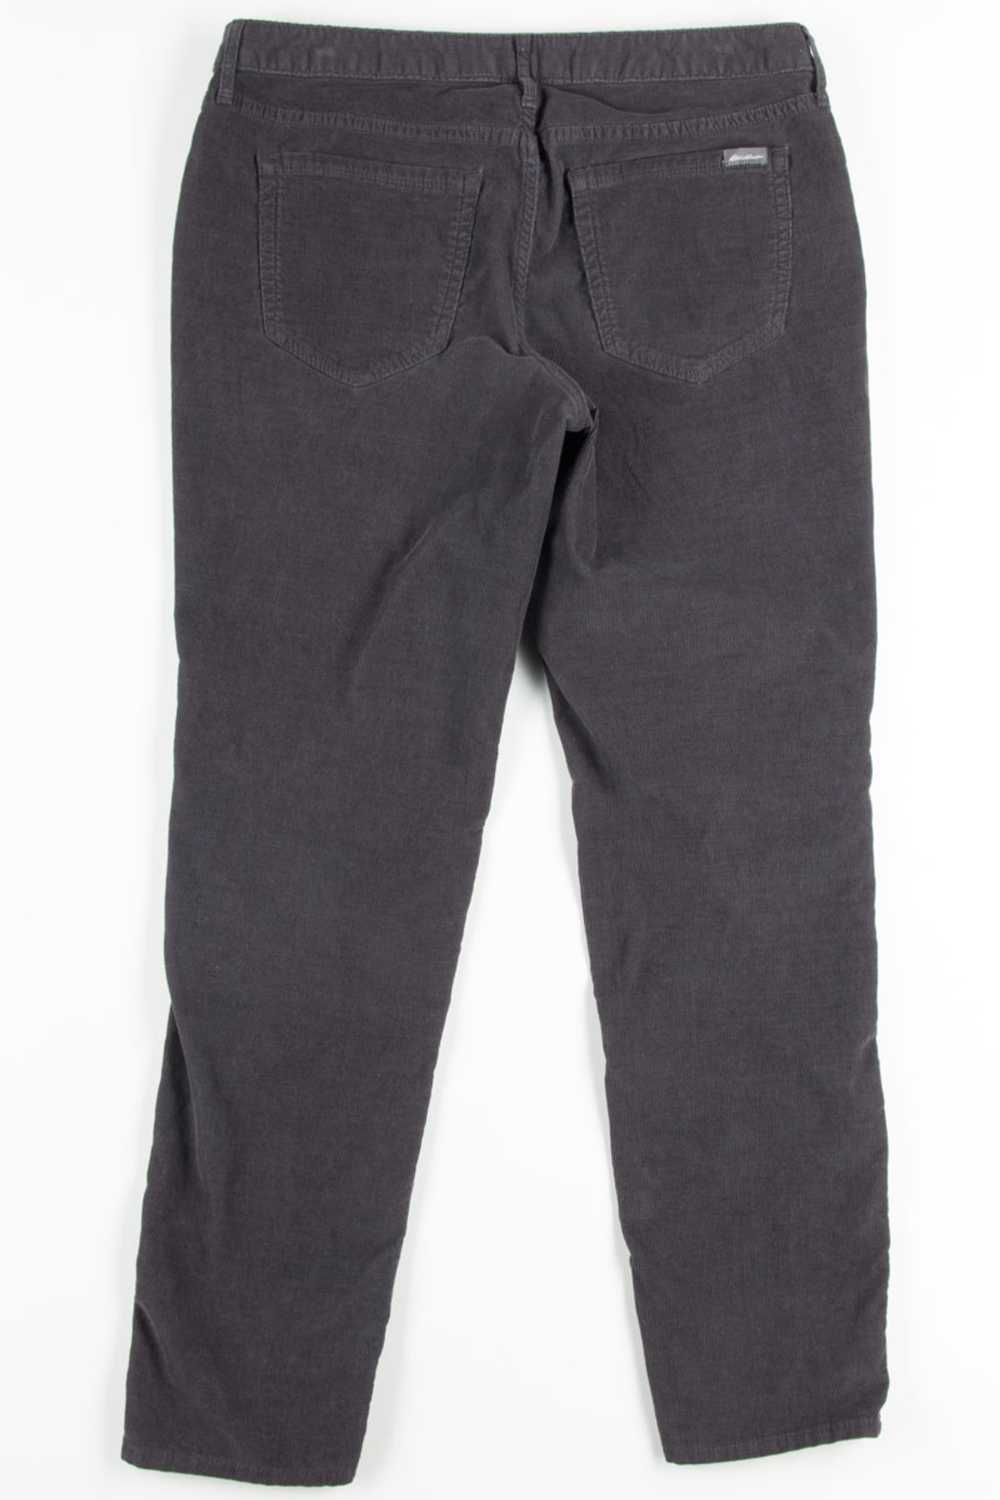 Grey Eddie Bauer Corduroy Pants - image 1